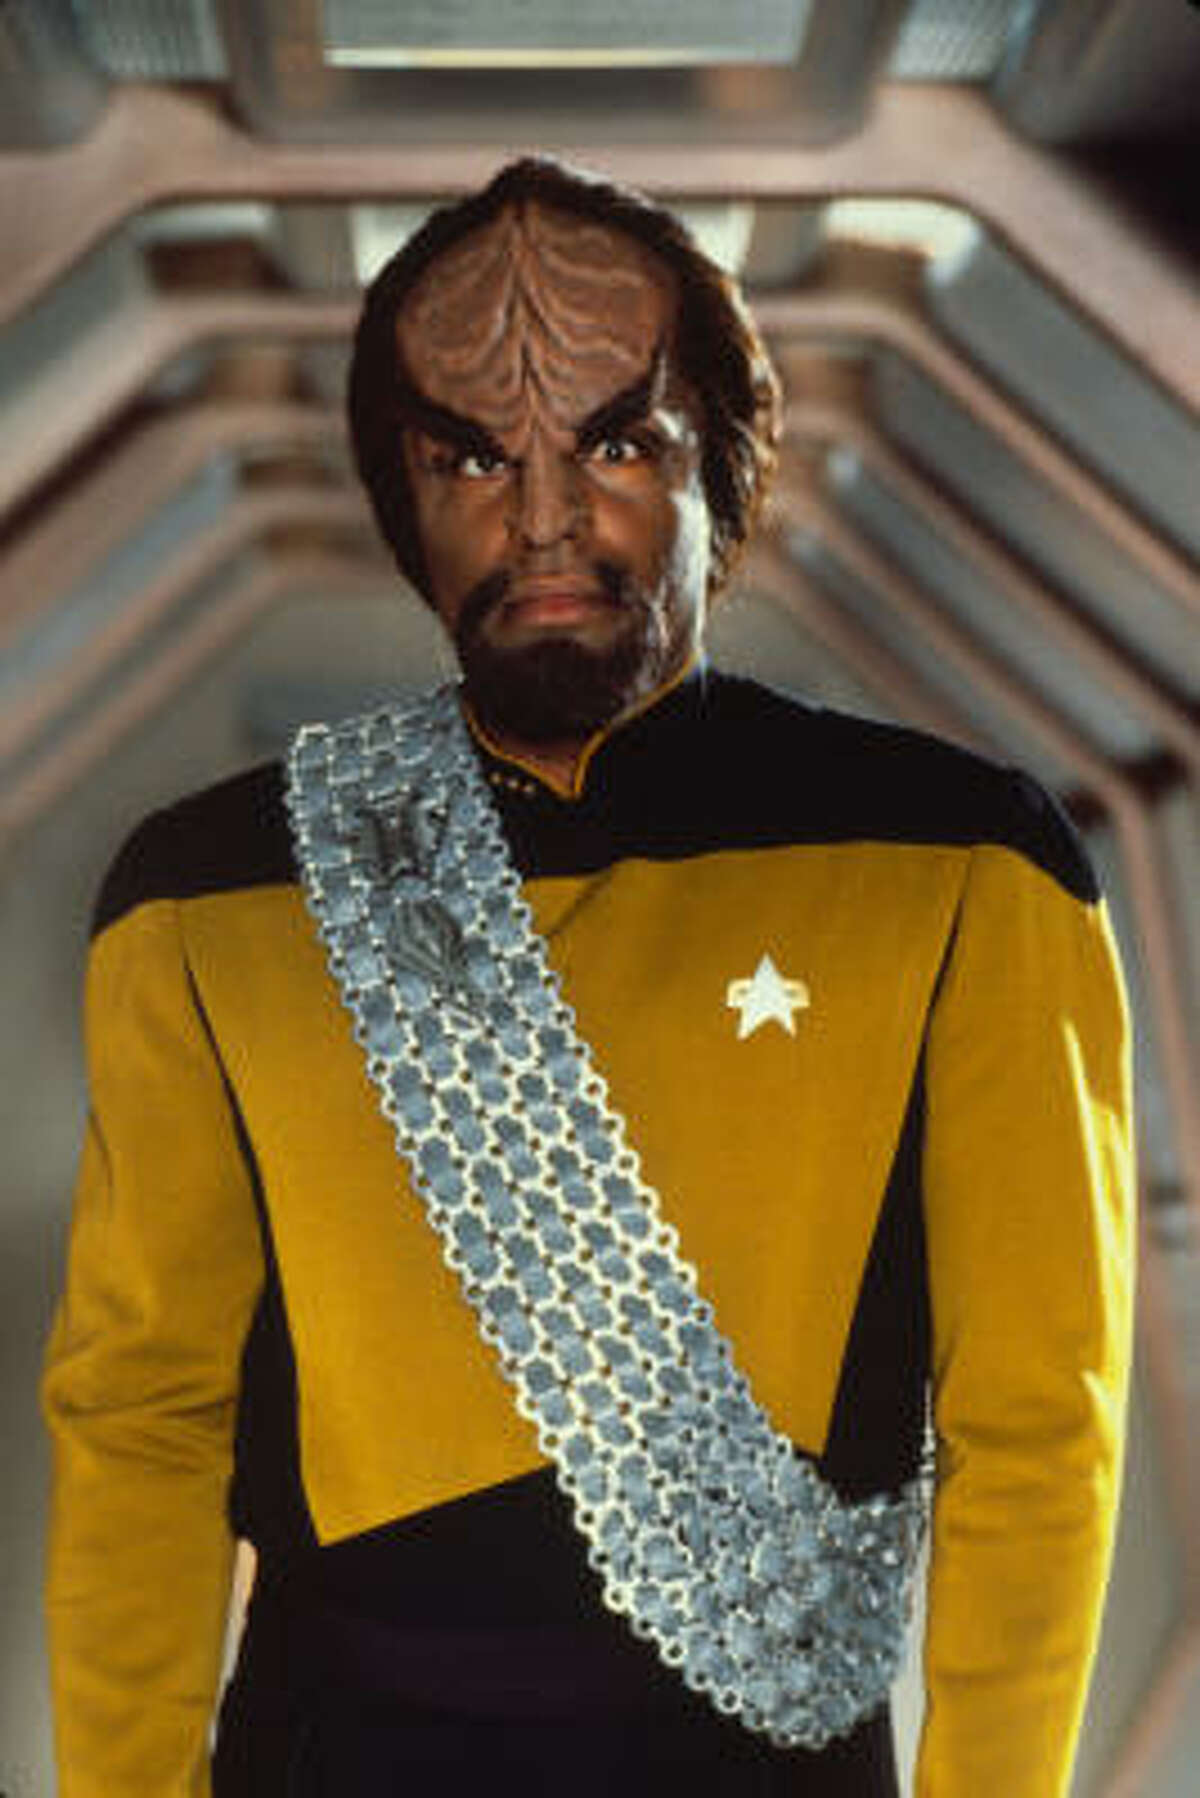 Michael Dorn in full Klingon regalia in the film Star Trek: Generations.